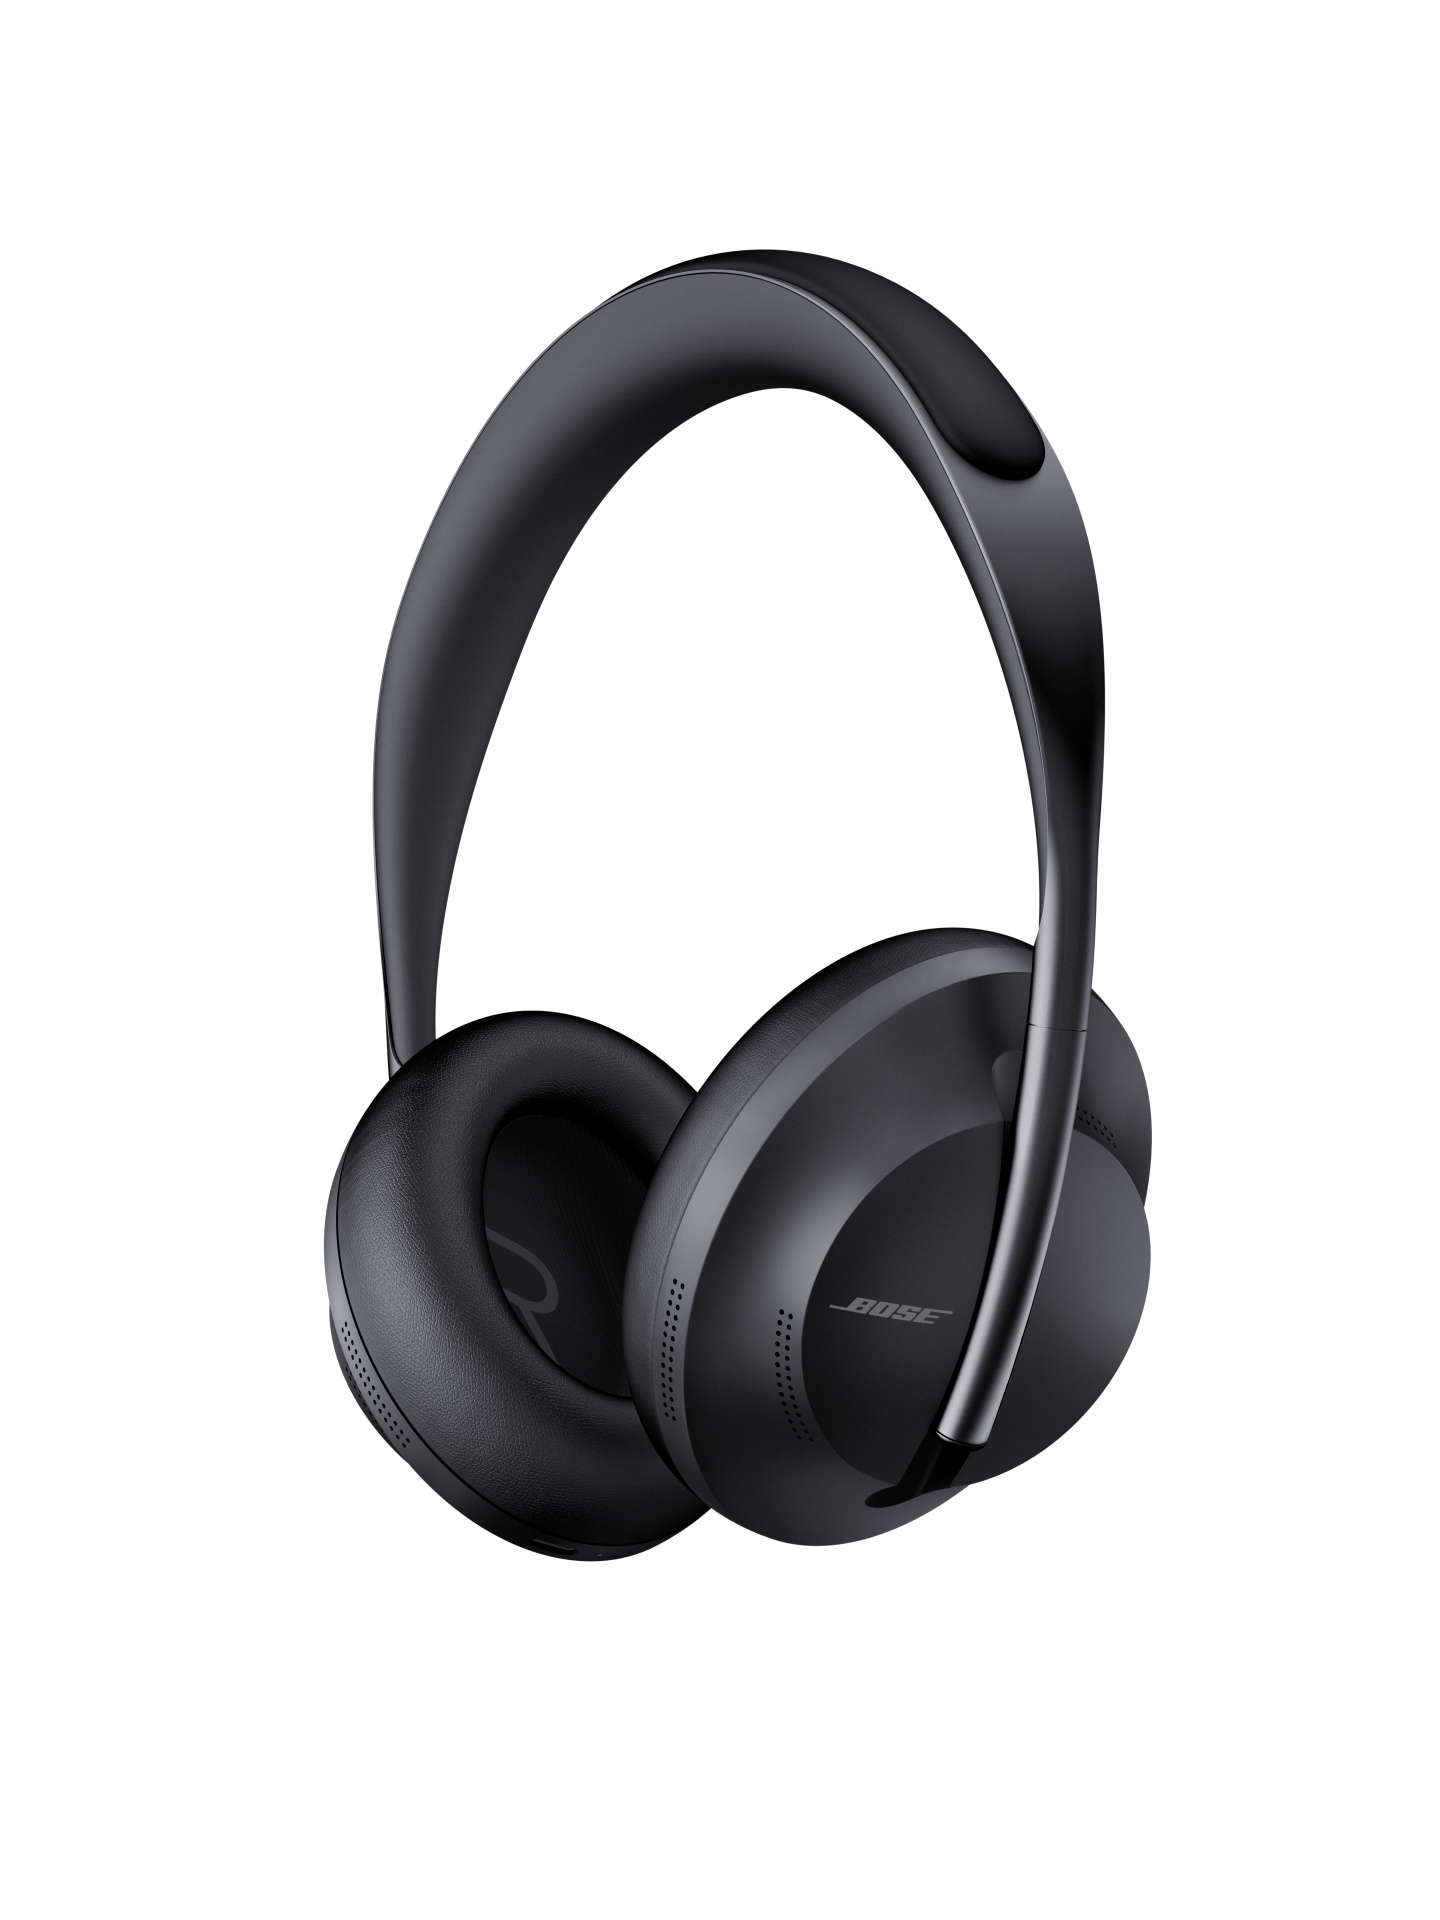 Bose Noise Cancelling Headphones 700 over-ear Wireless Bluetooth Earphones, Black - image 1 of 10